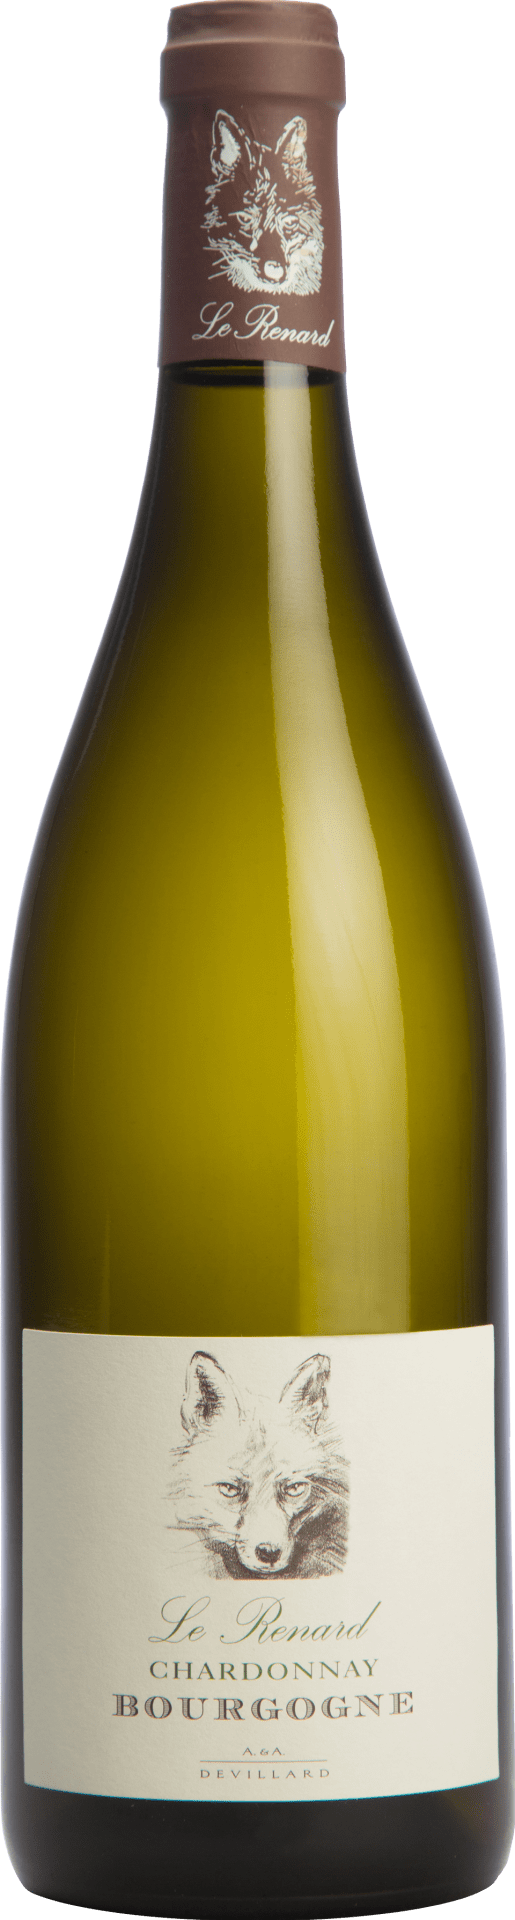 Le Renard Bourgogne Chardonnay